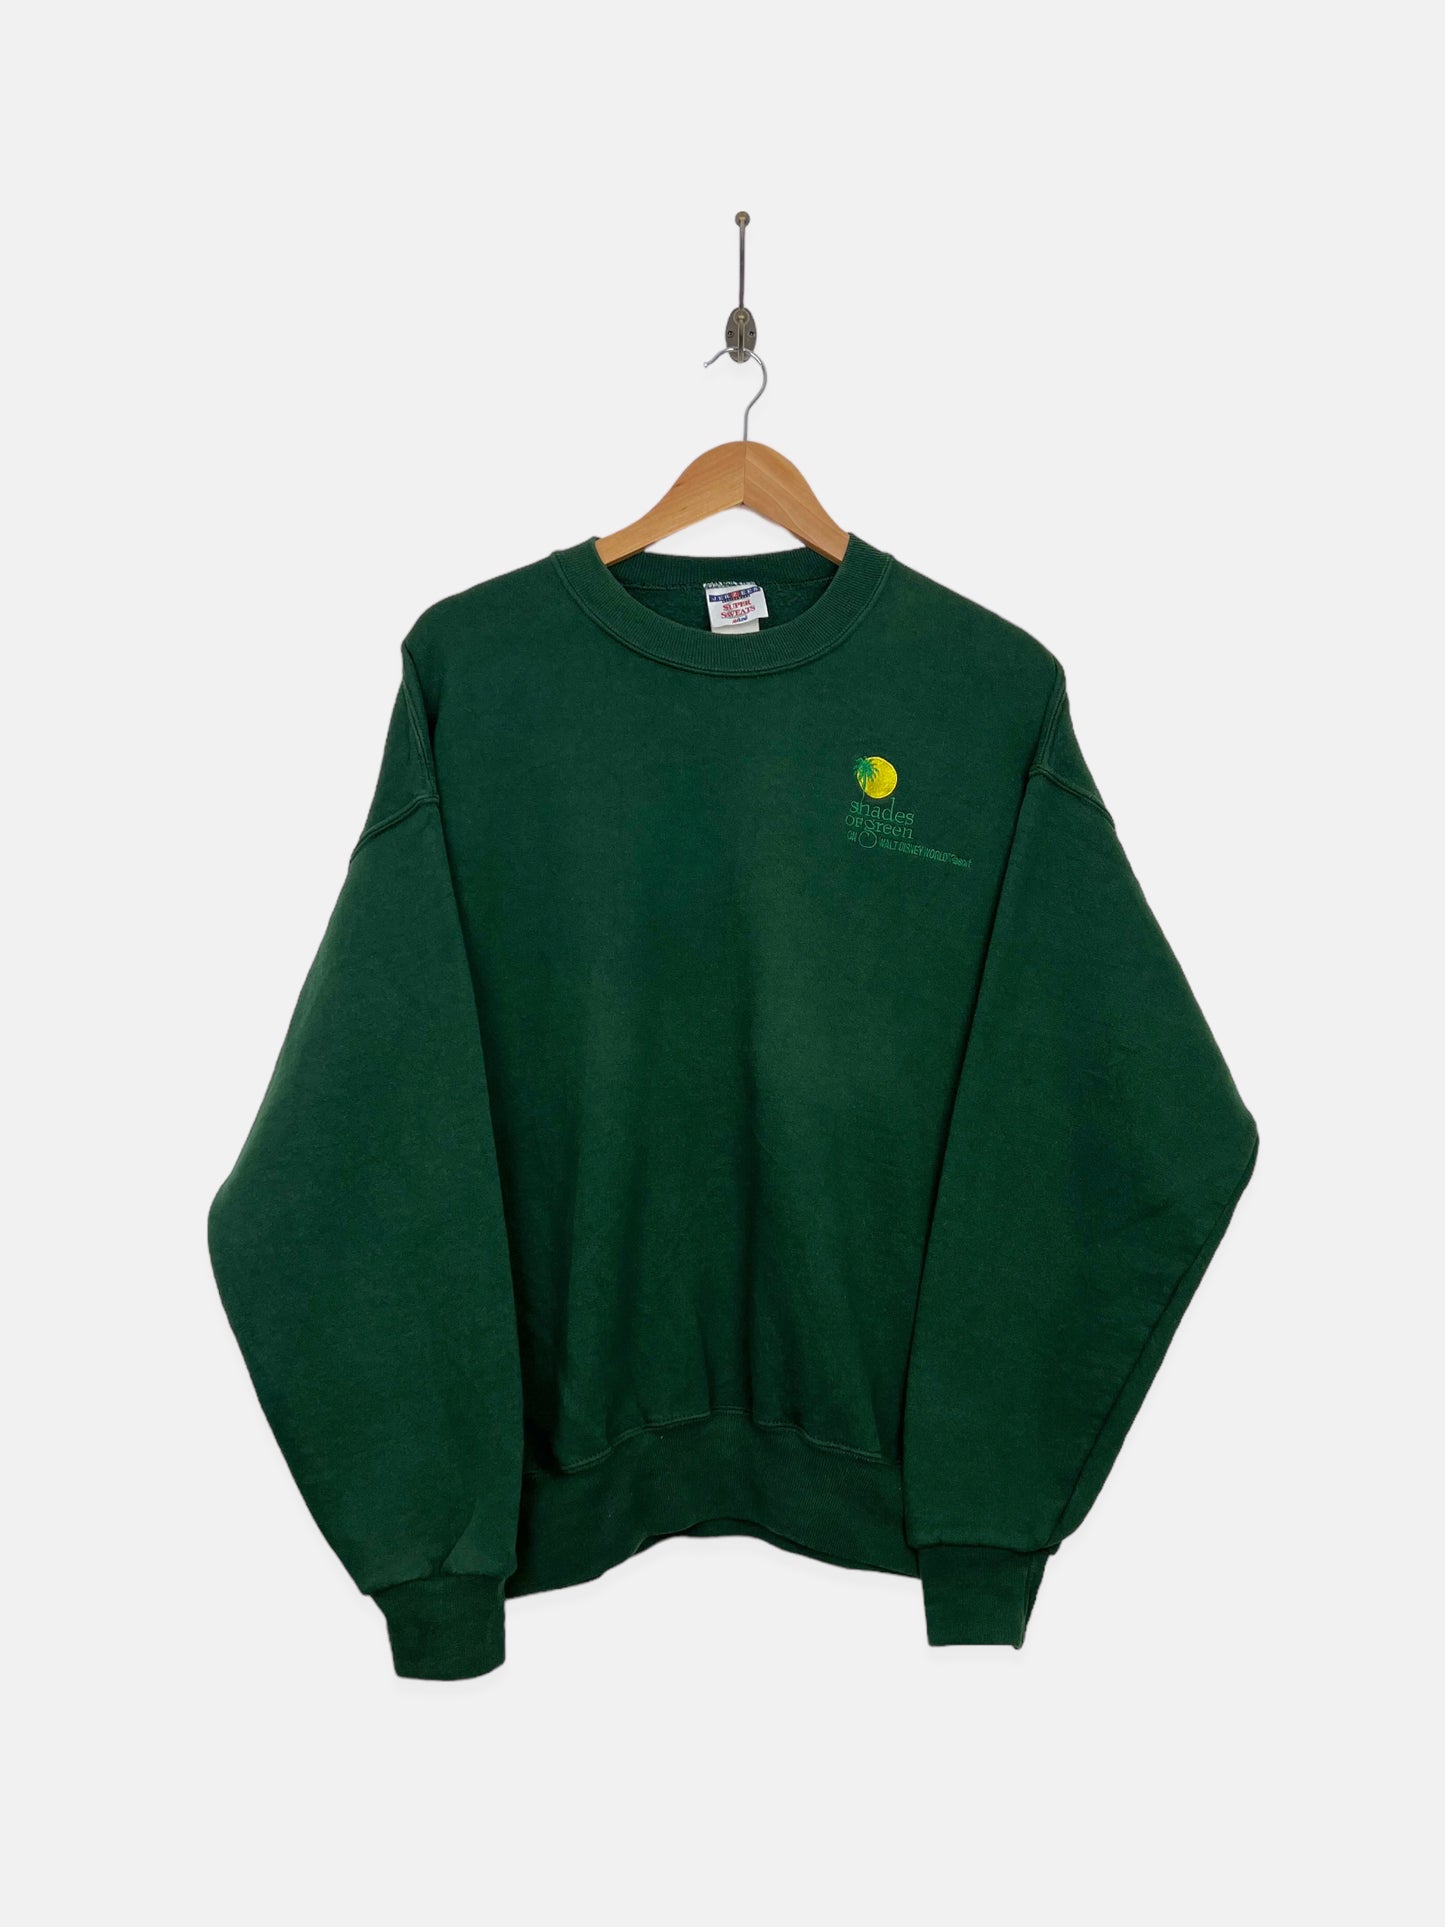 90's Shades Of Green Walt Disney World Embroidered Vintage Sweatshirt Size M-L